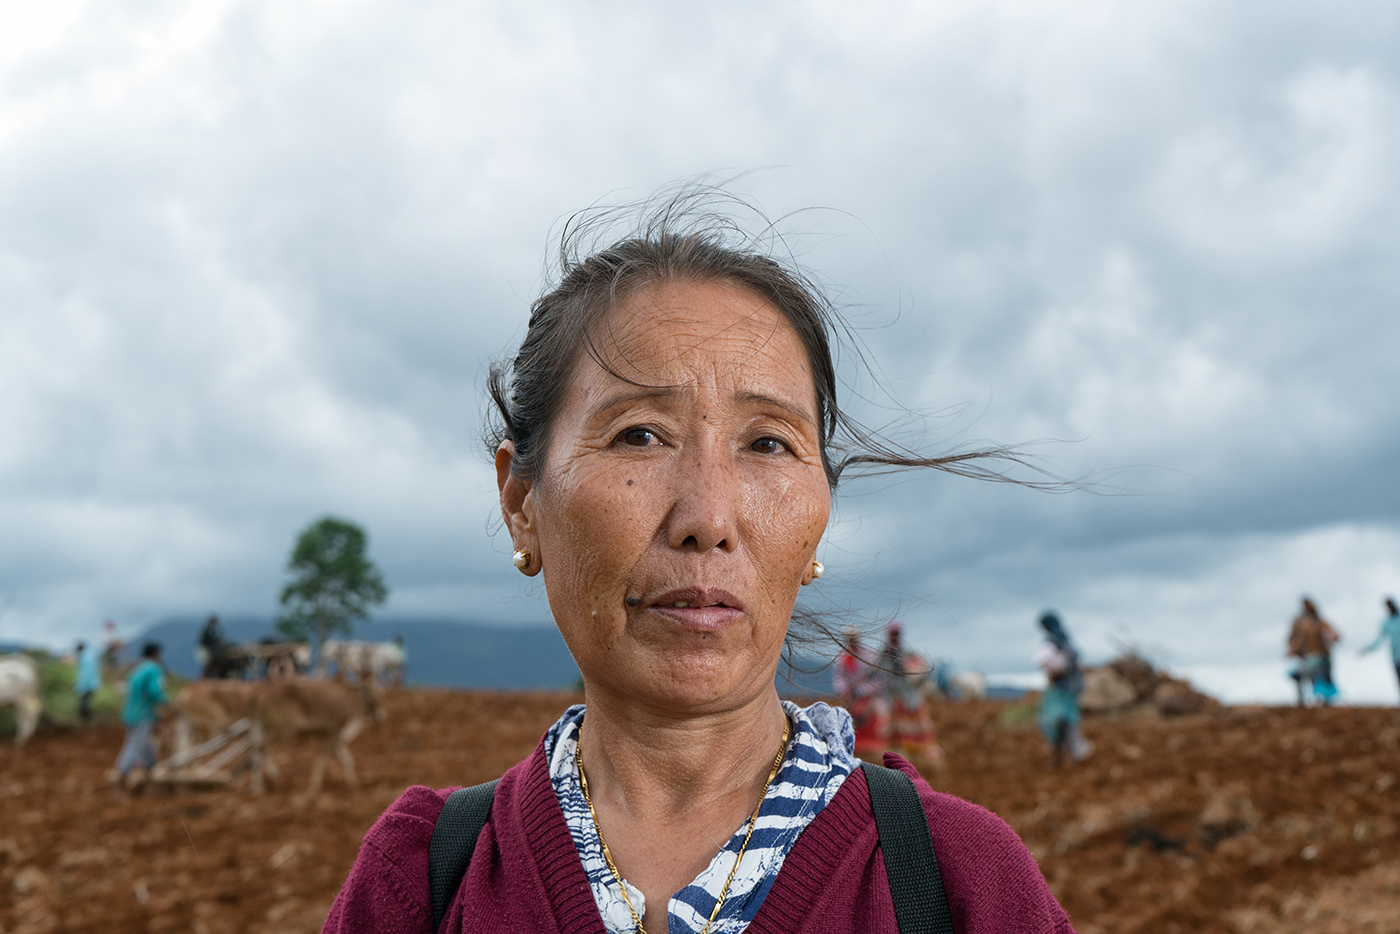 portraits environmental portraits tibetan people flash portraits people culture India karnataka